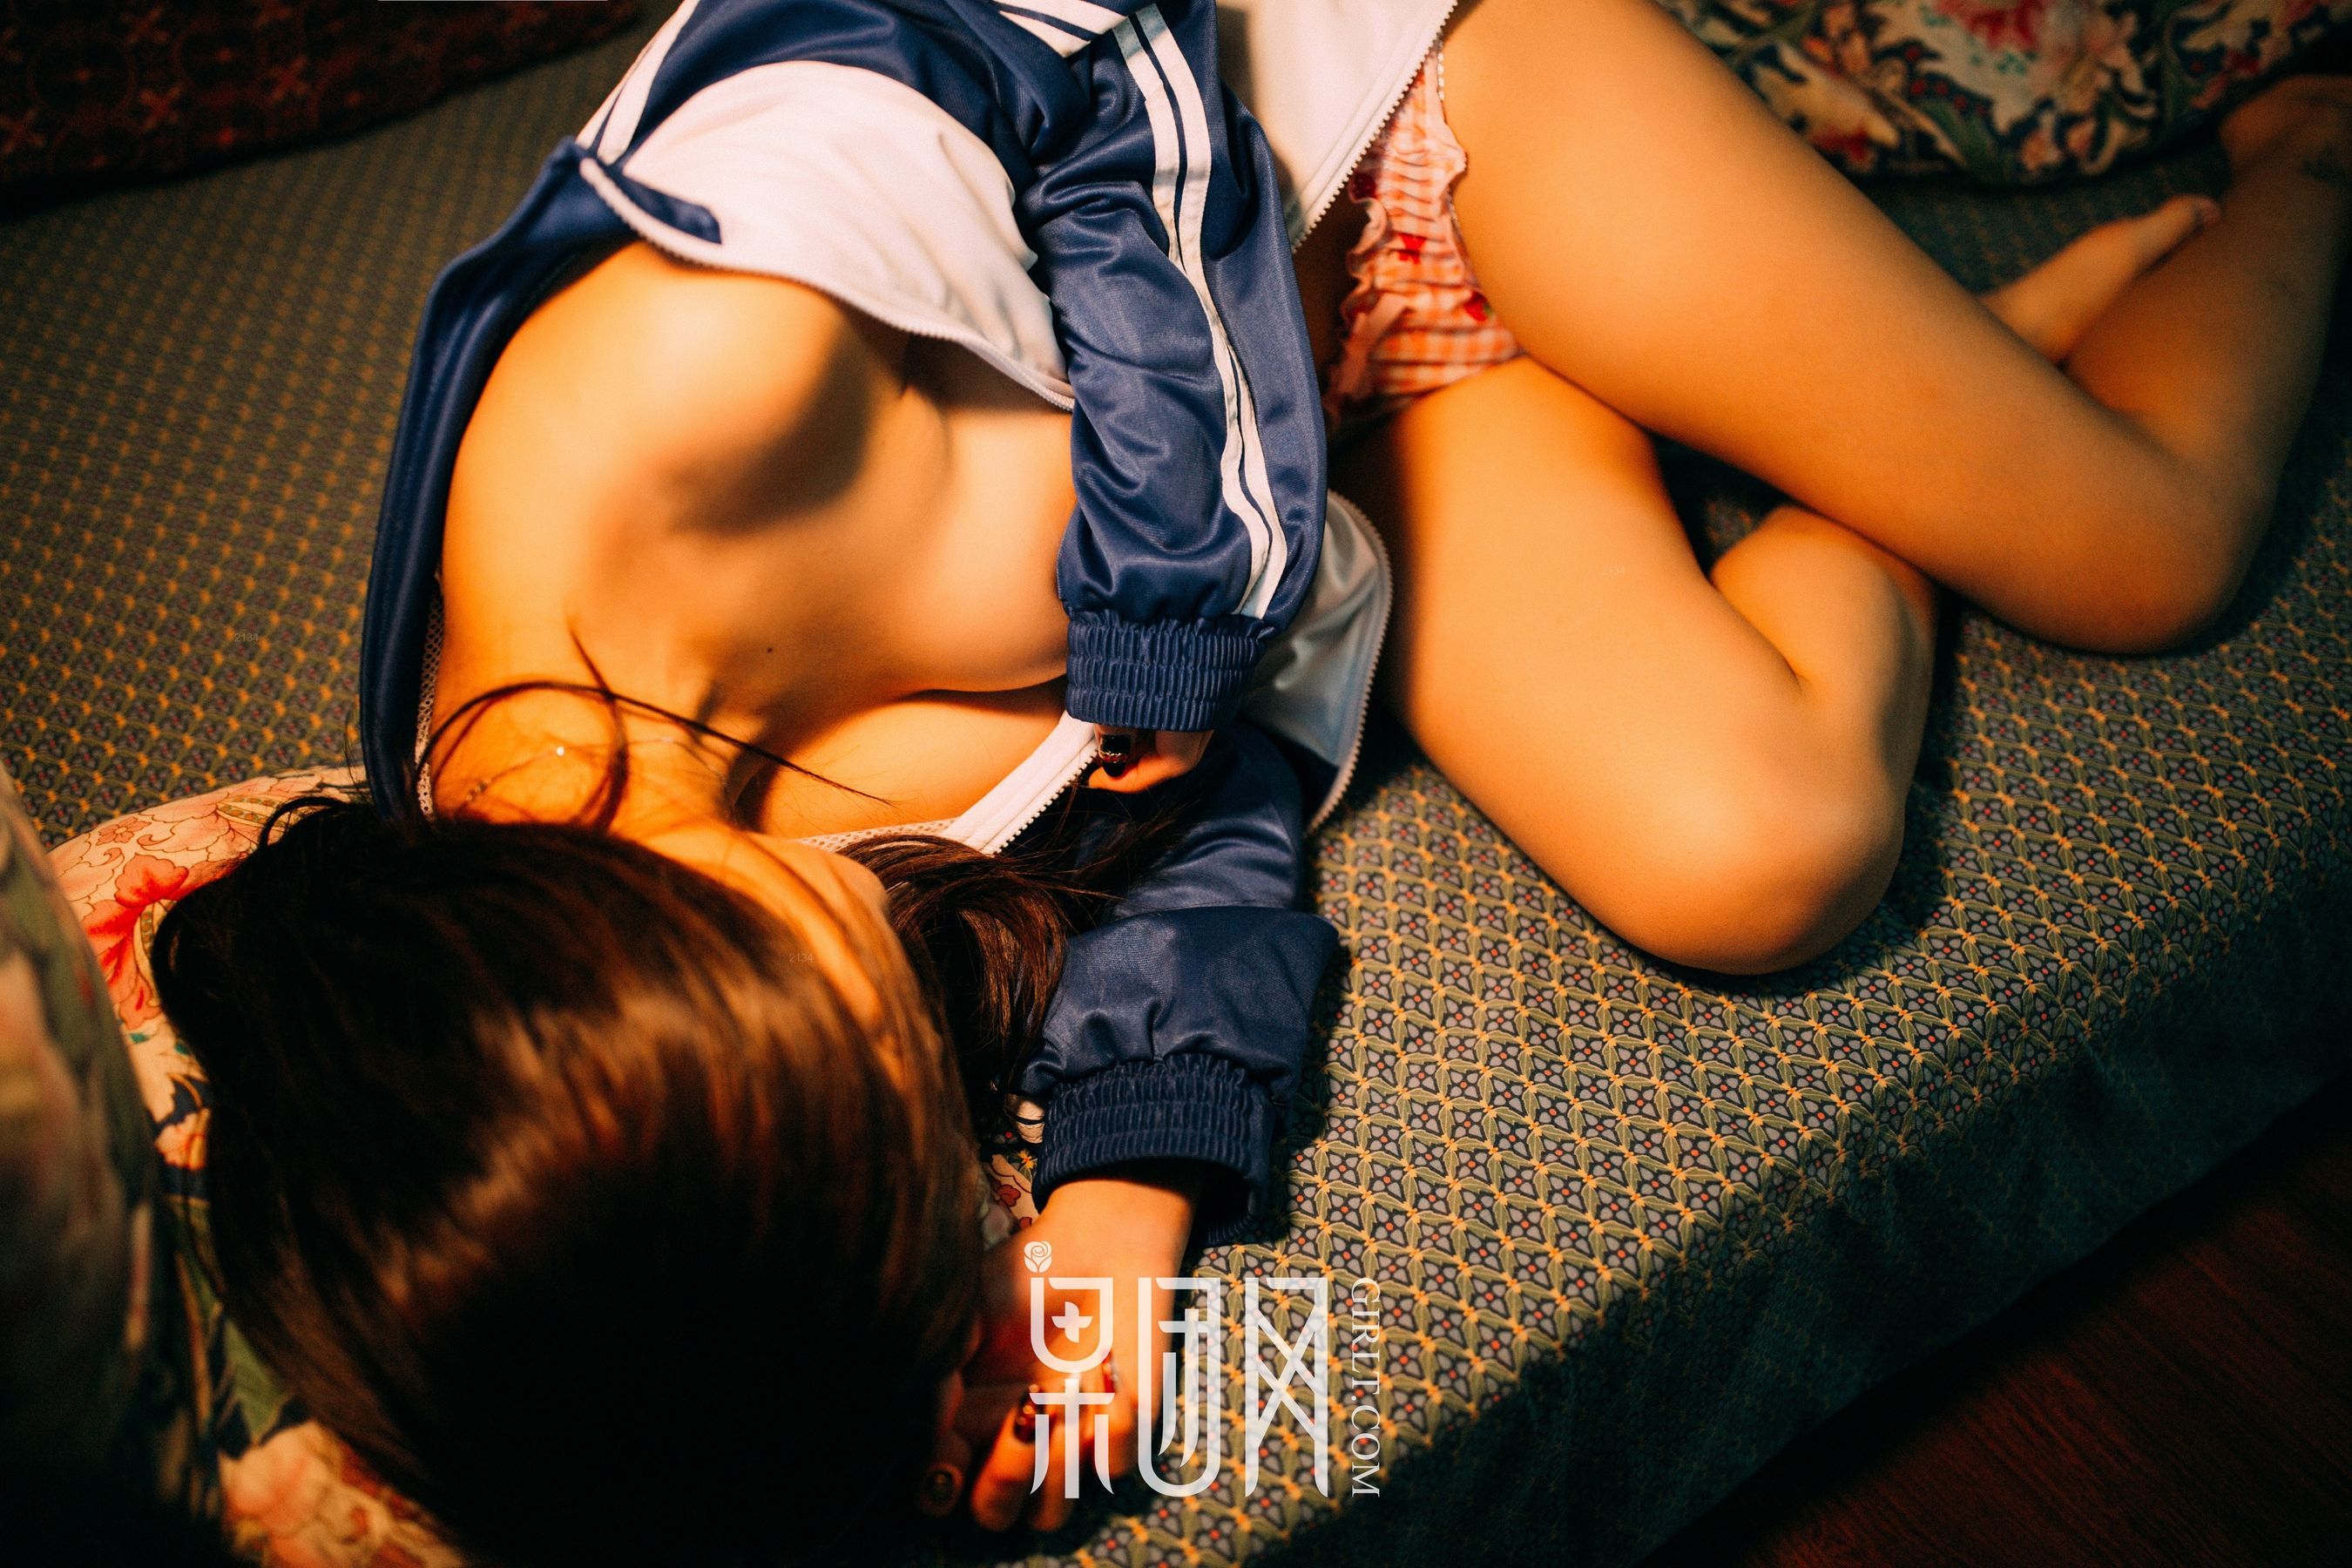 “School Uniform Style of Student Sister” [Guo Tuan Girl] Xiong Chuan Jixin No.015 Photo Album